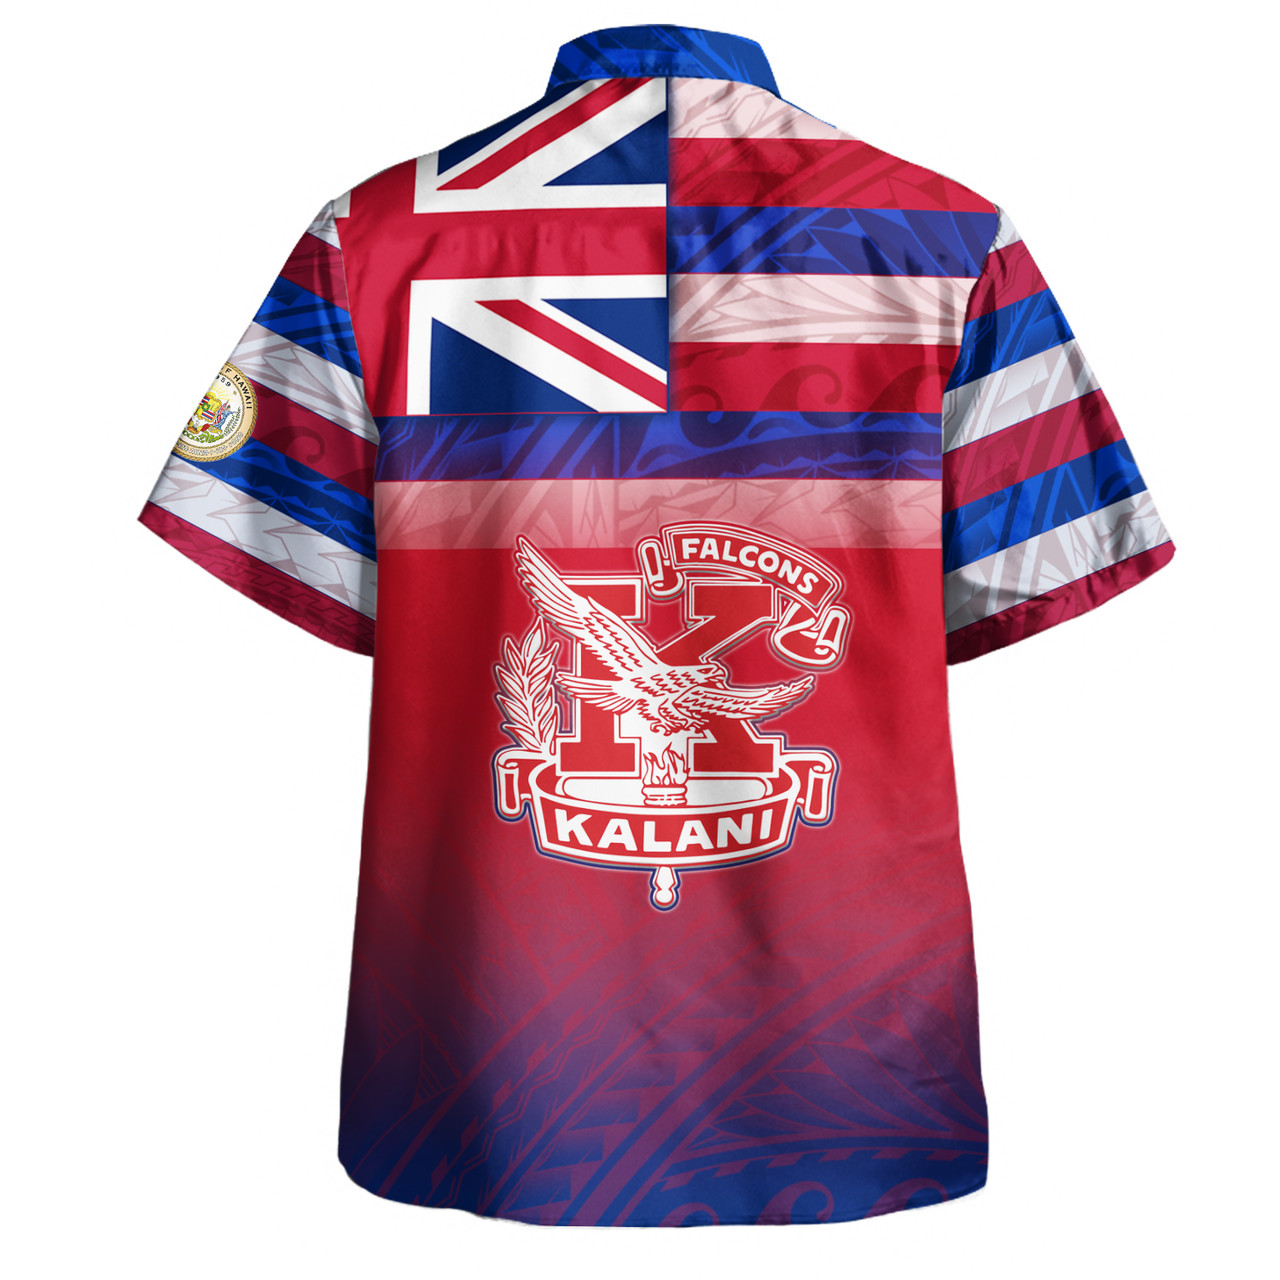 Hawaii Kalani High School Hawaii Shirt Flag Color With Traditional Patterns